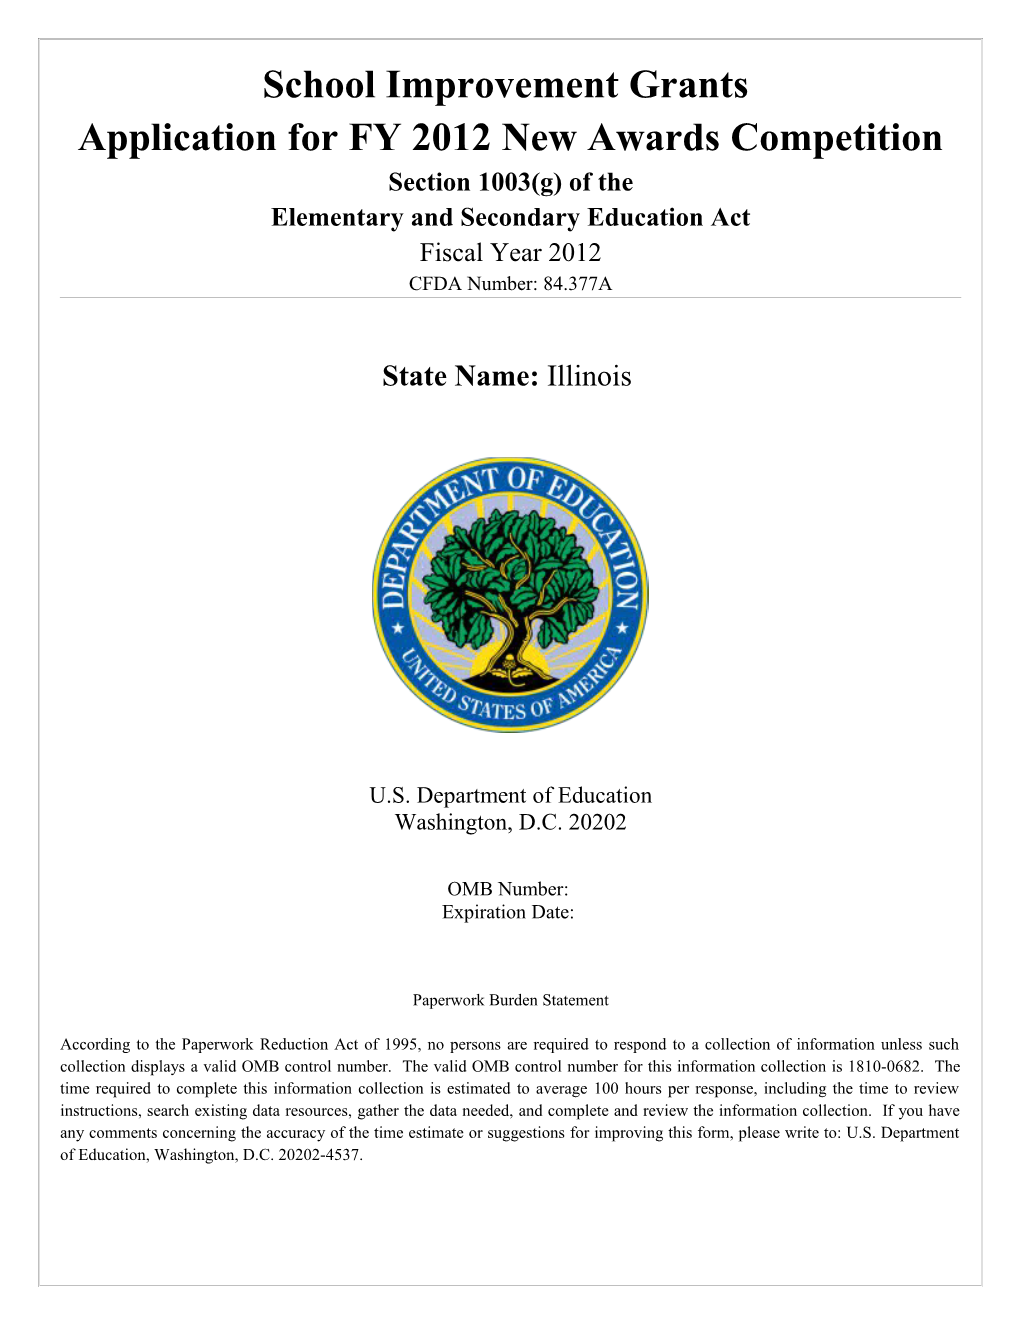 FY 2012 School Improvement Grant for Illinois State (PDF)